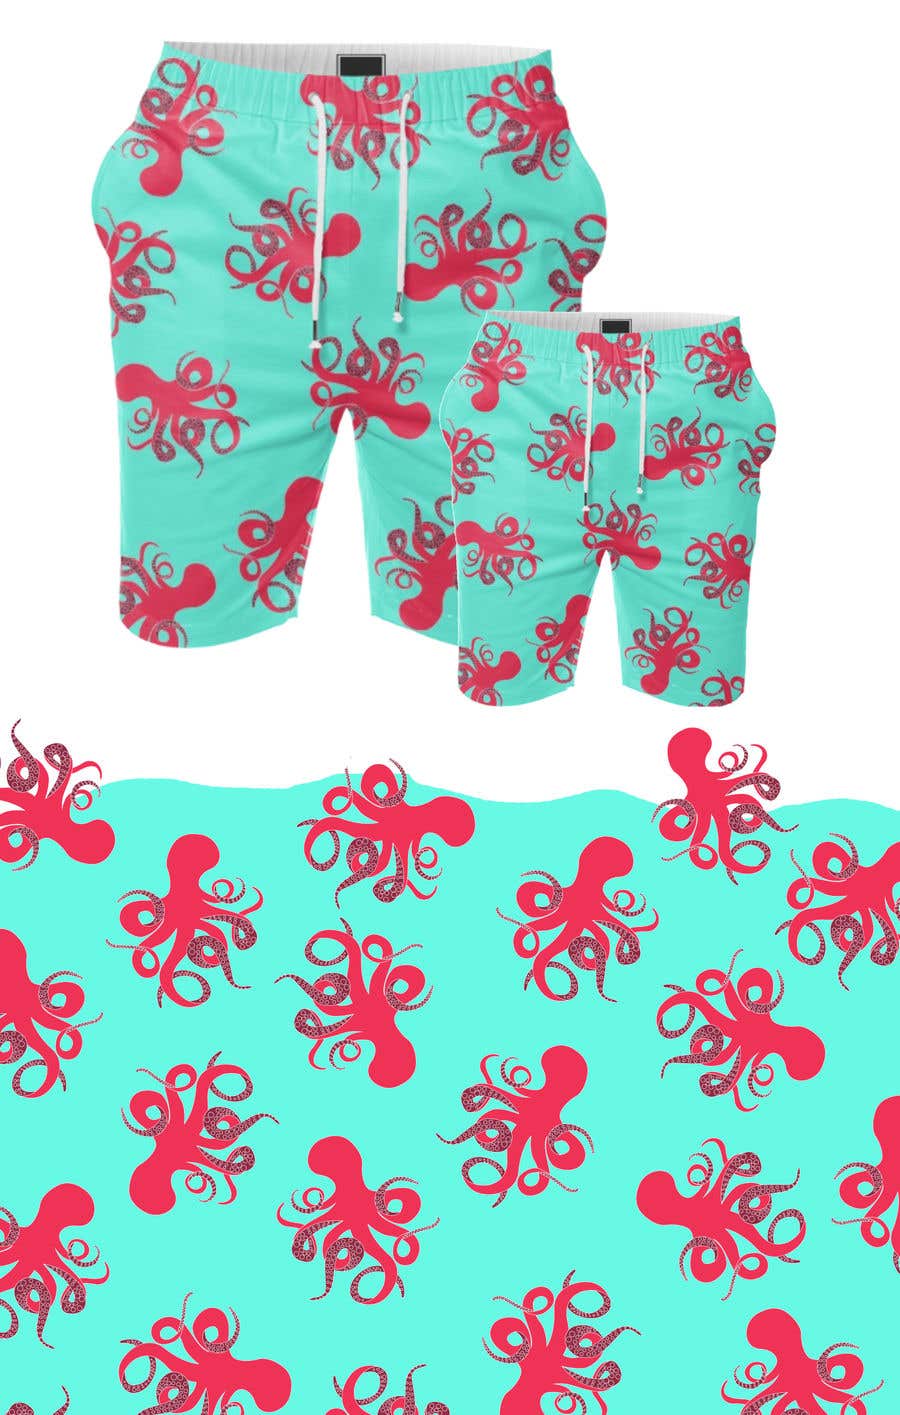 Wasilisho la Shindano #24 la                                                 Design 3 Print Patterns for Boy/Men Swimwear
                                            